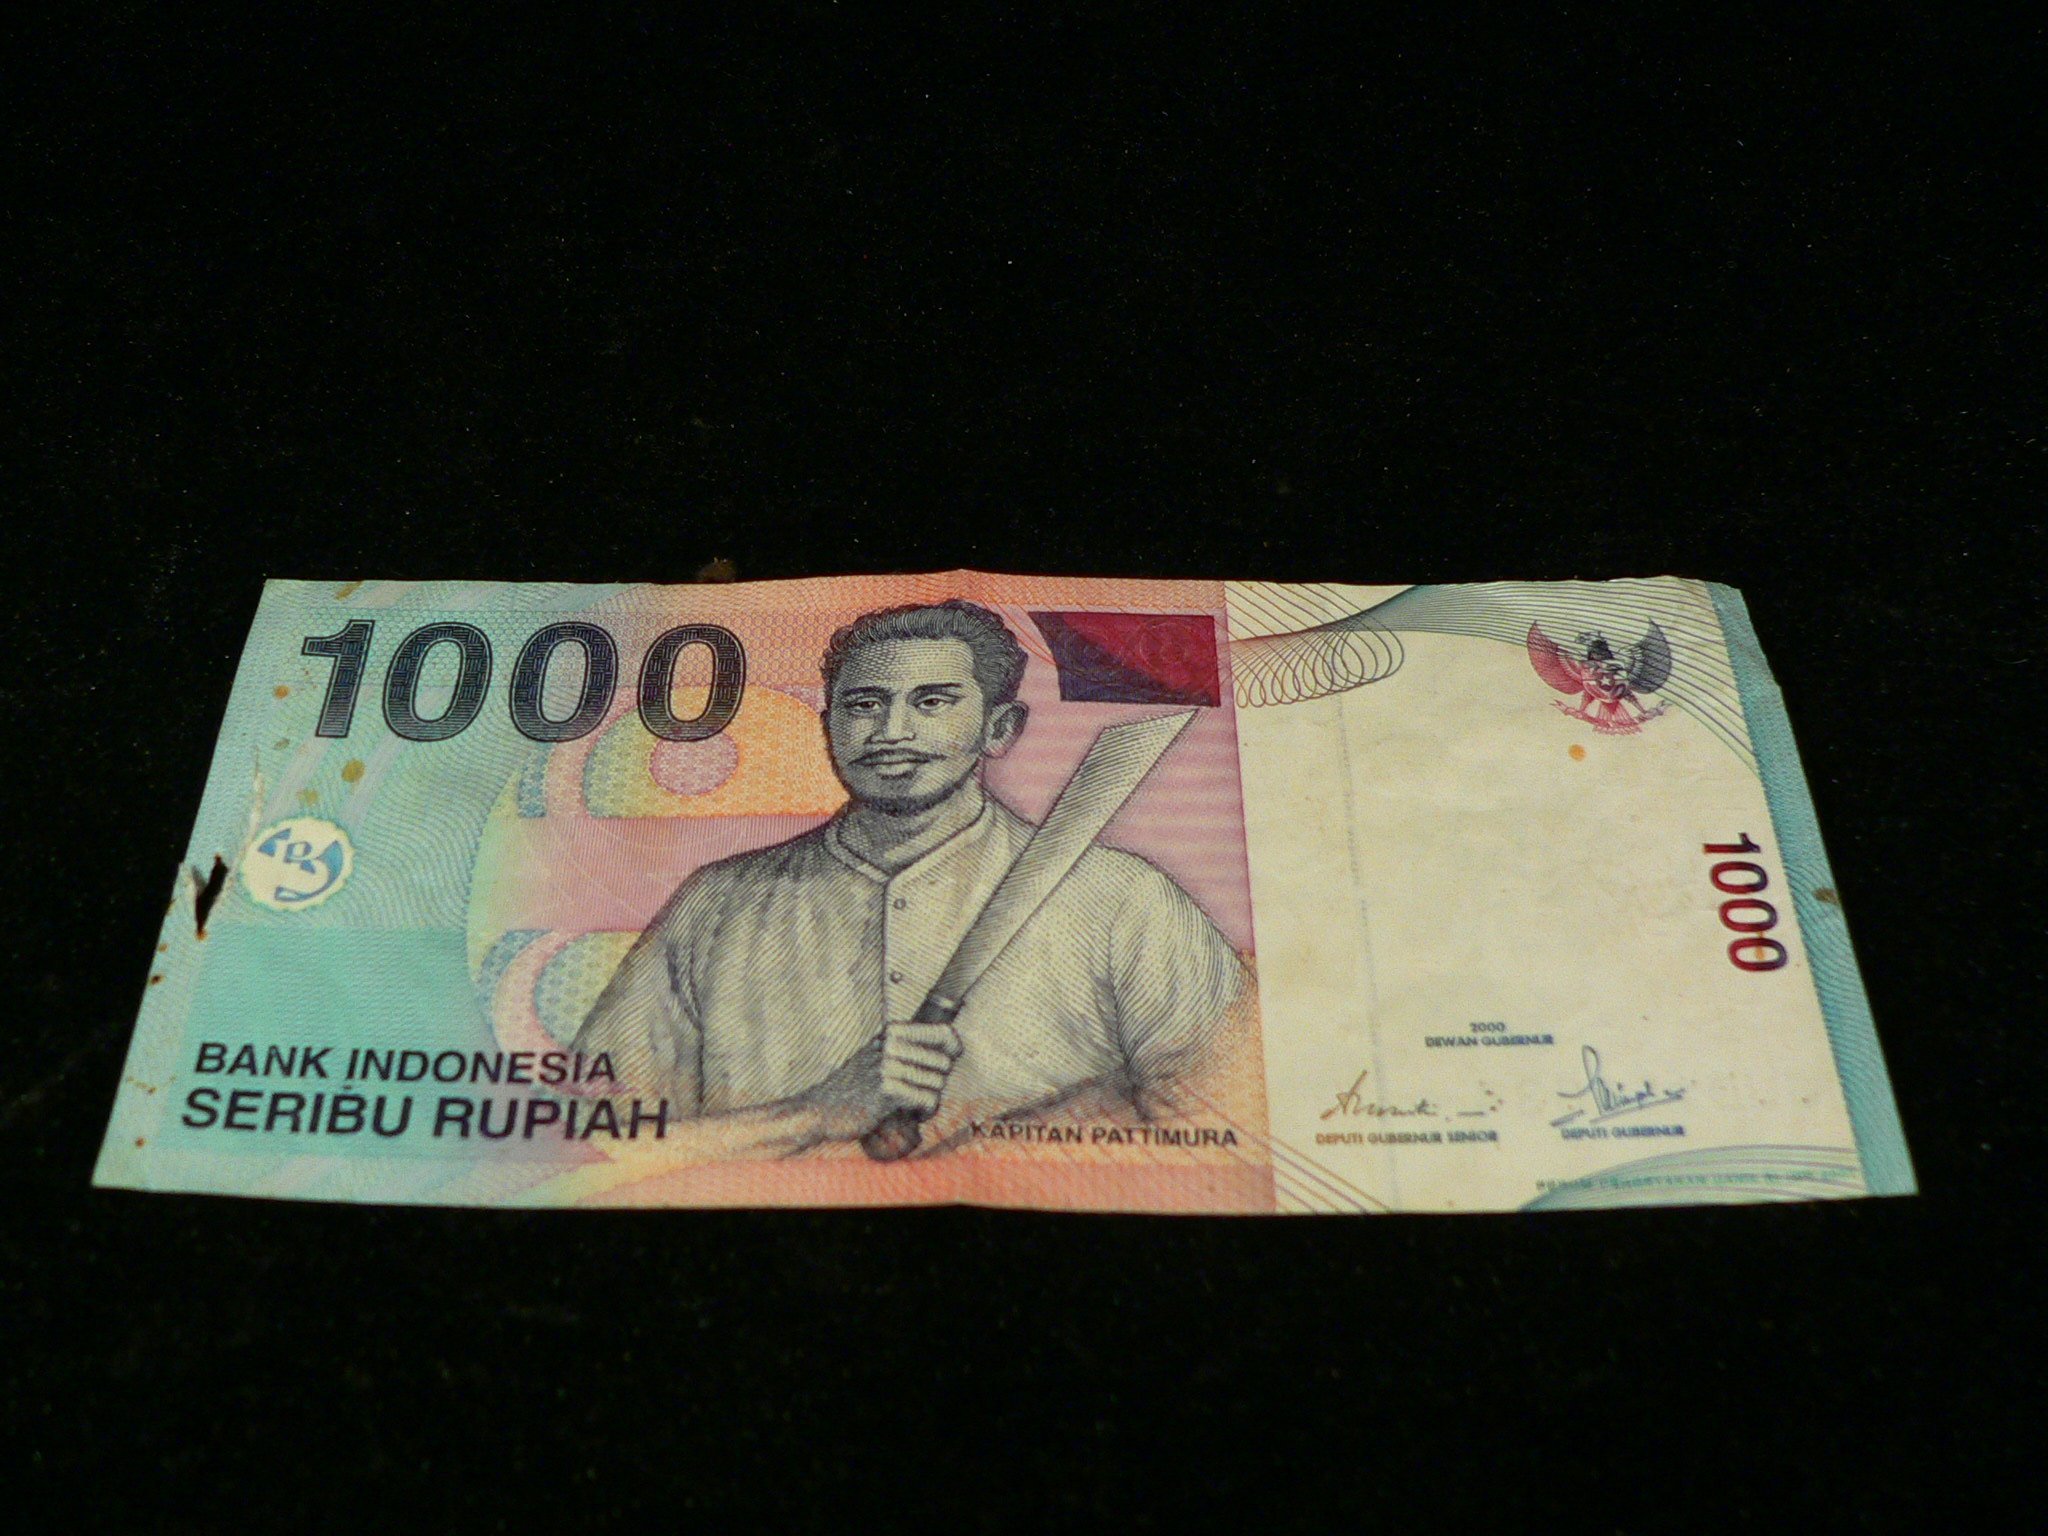 印尼盾 100Ribu盾 Uang Kertas - Pixabay上的免费照片 - Pixabay